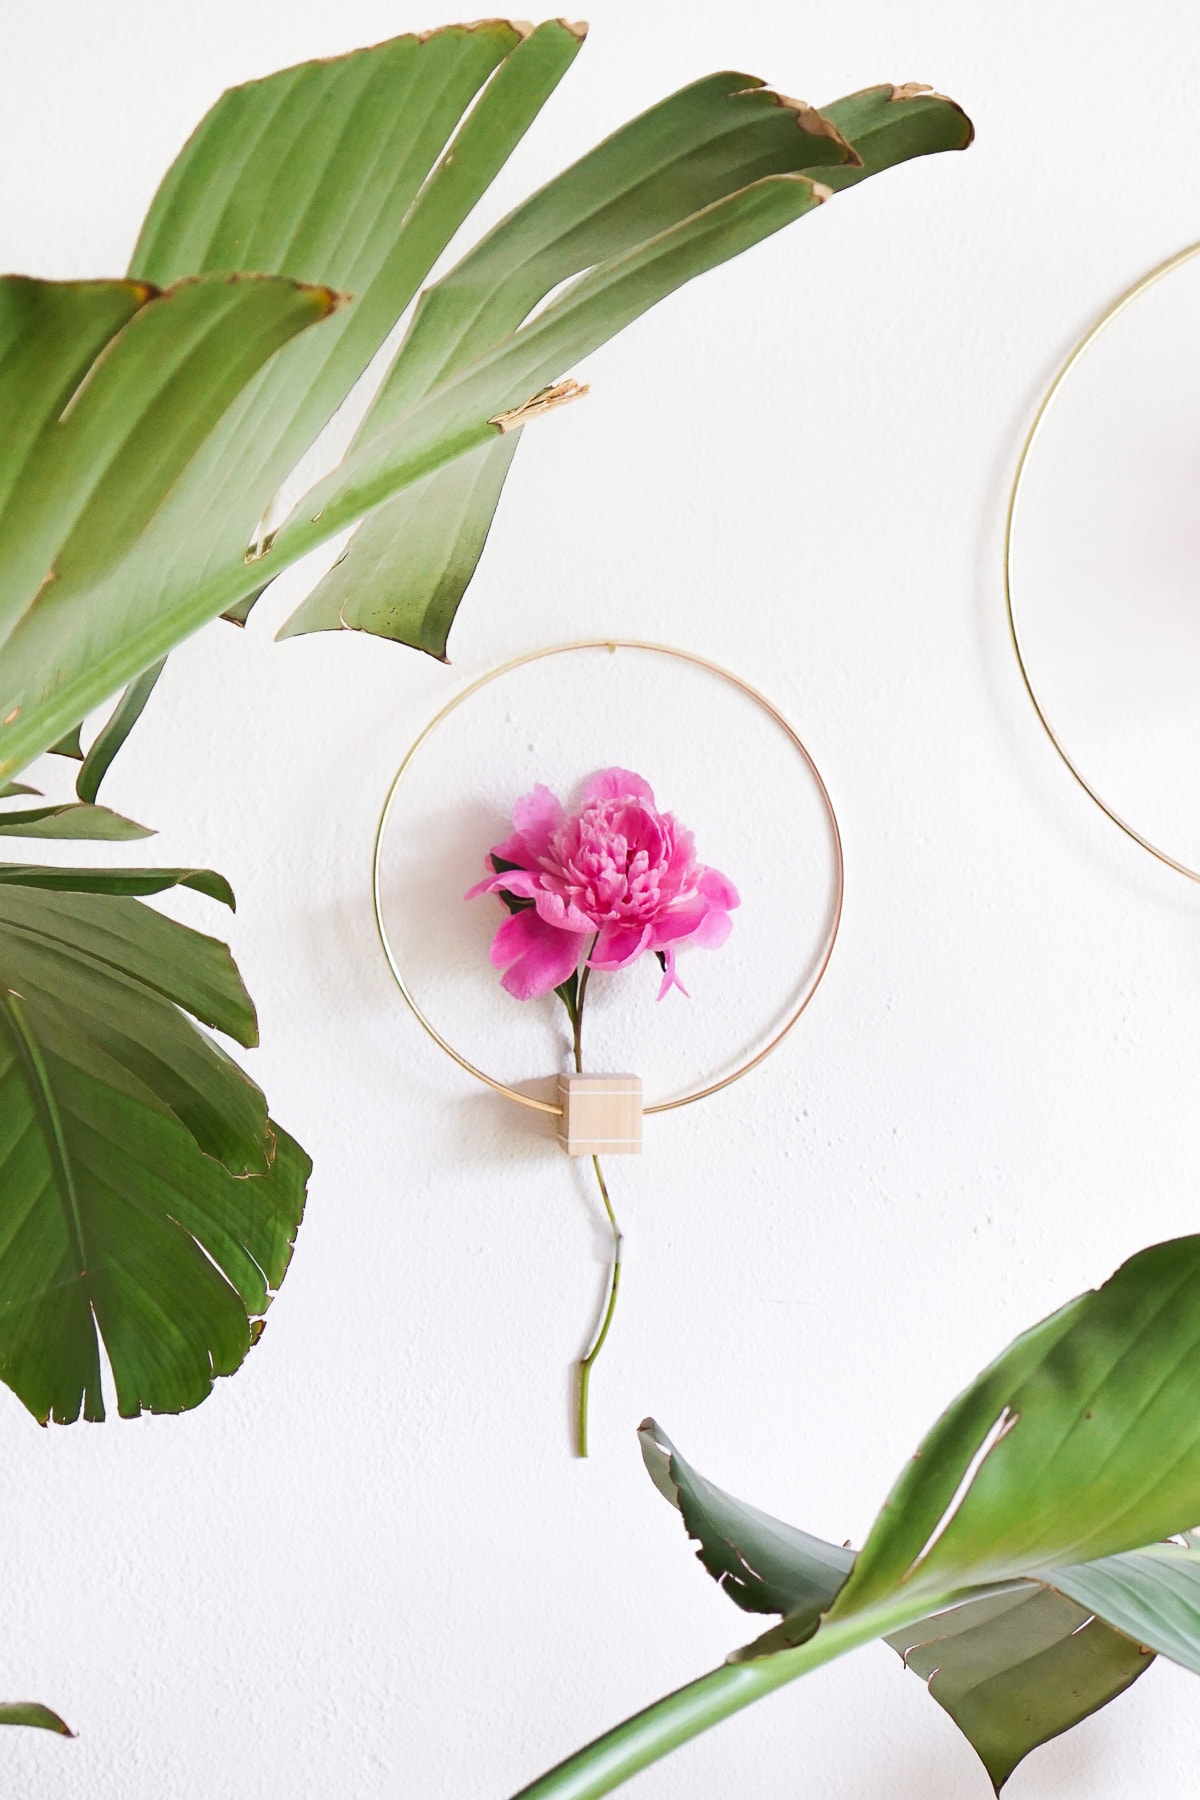 DIY Minimalist Flower Wall Hang by Ashley Rose of Sugar & Cloth, a top lifestyle blog in Houston, Texas